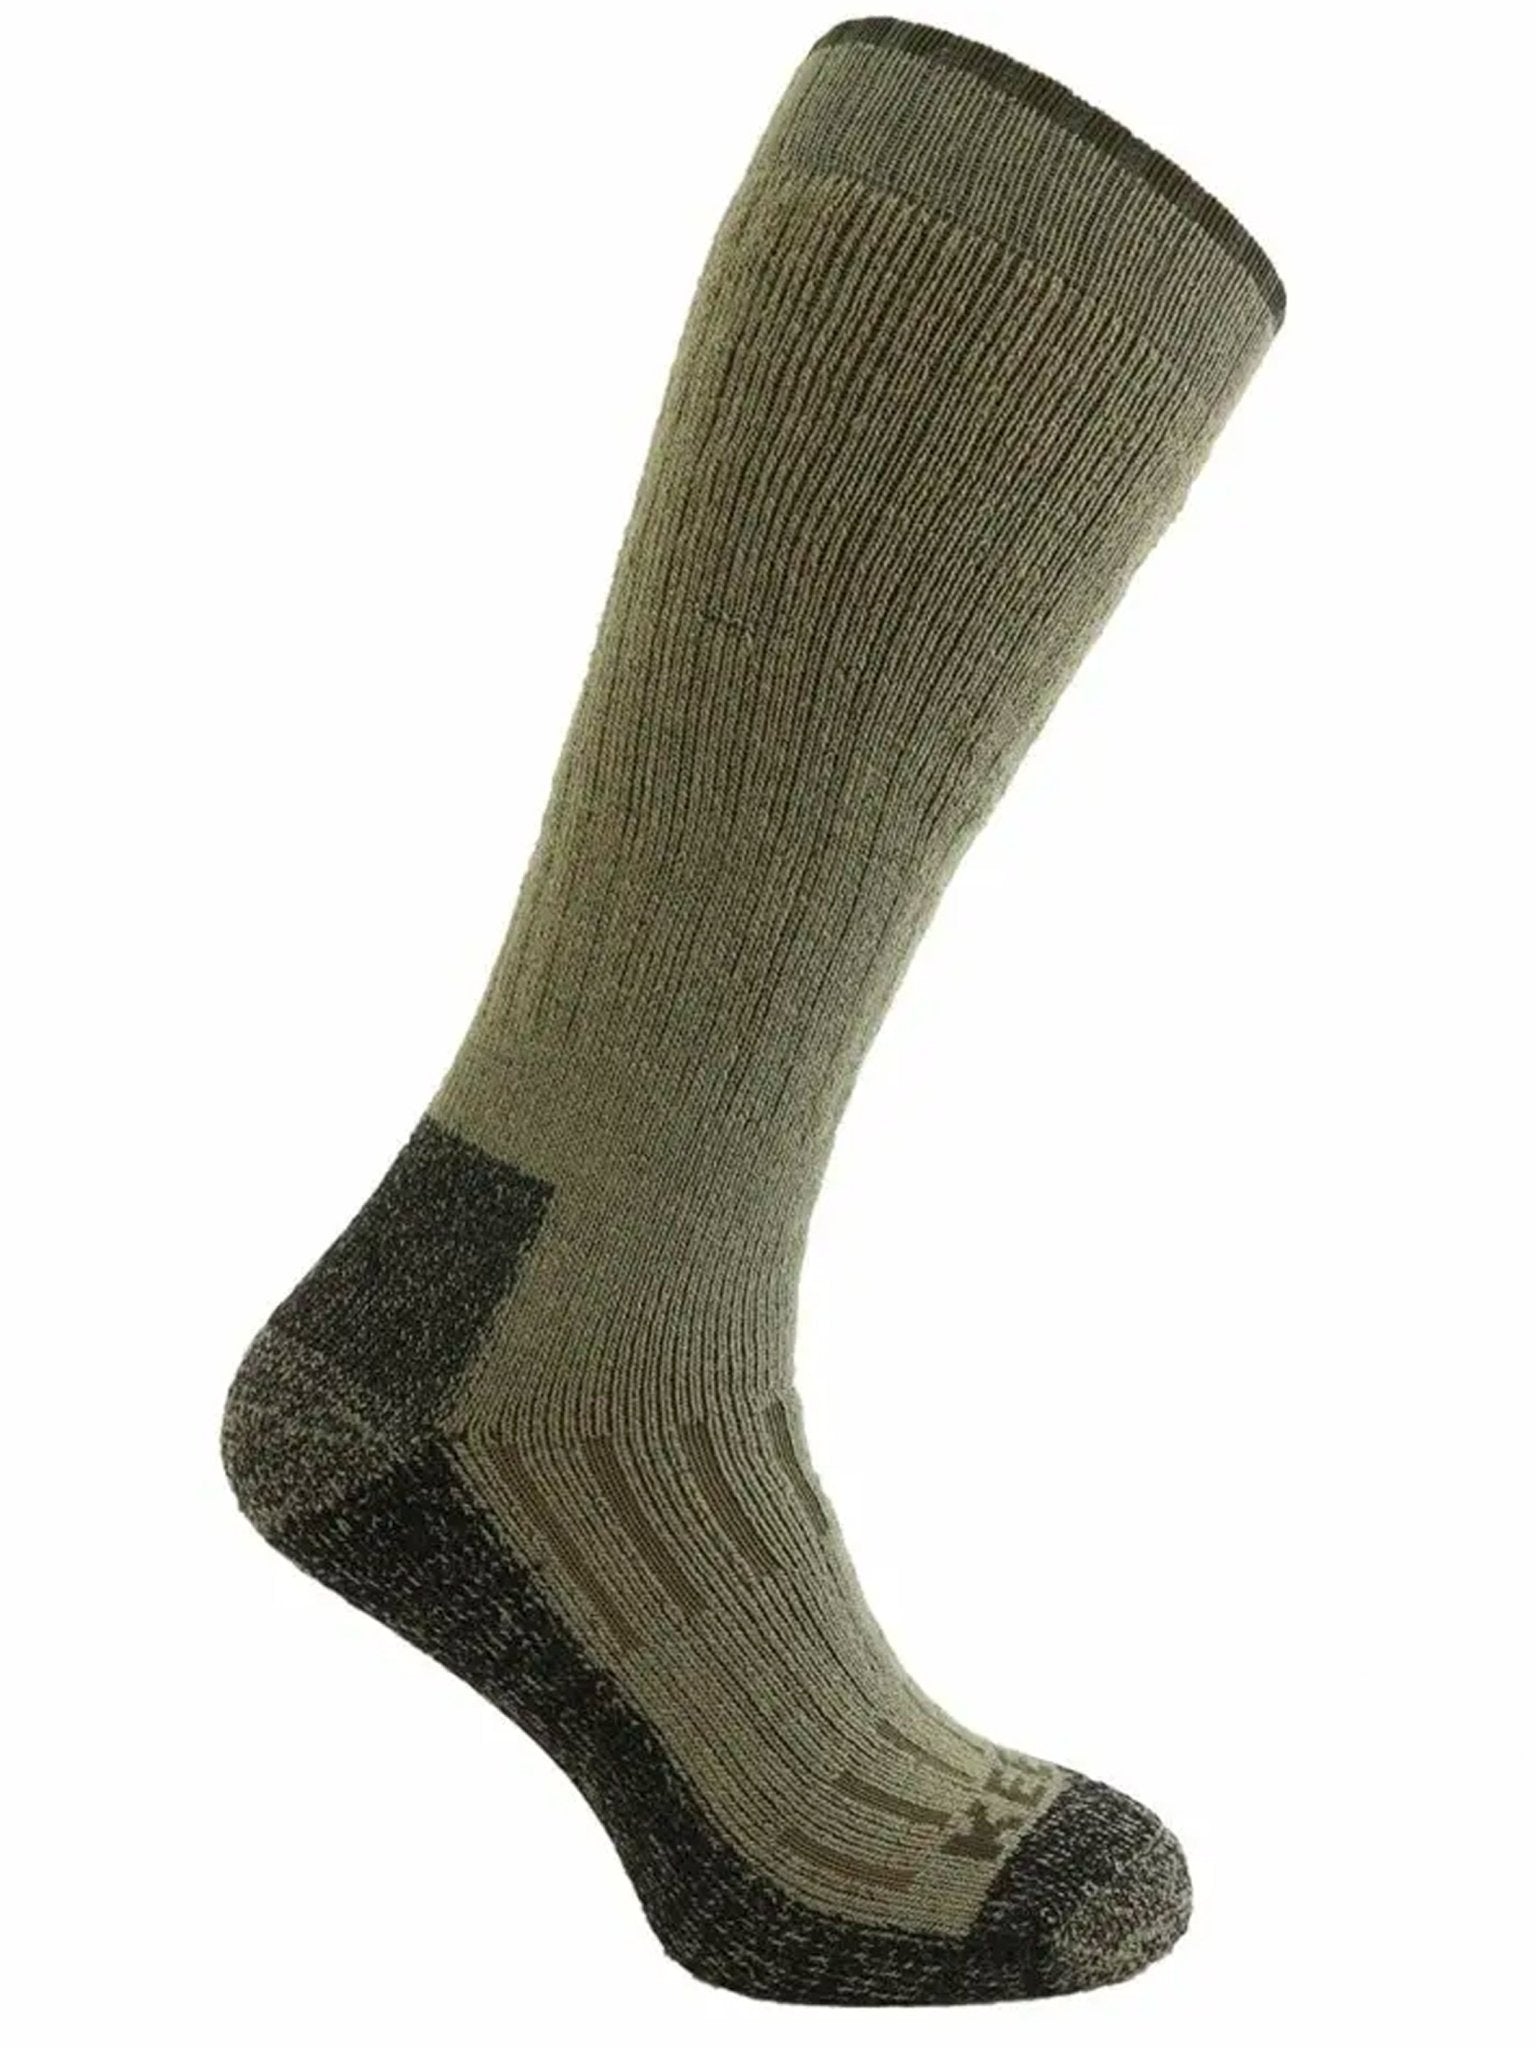 Keela Keela Outdoors - Glacier Socks - Cushioned, Cordura reinforced, comfort fit merino wool mens socks Socks